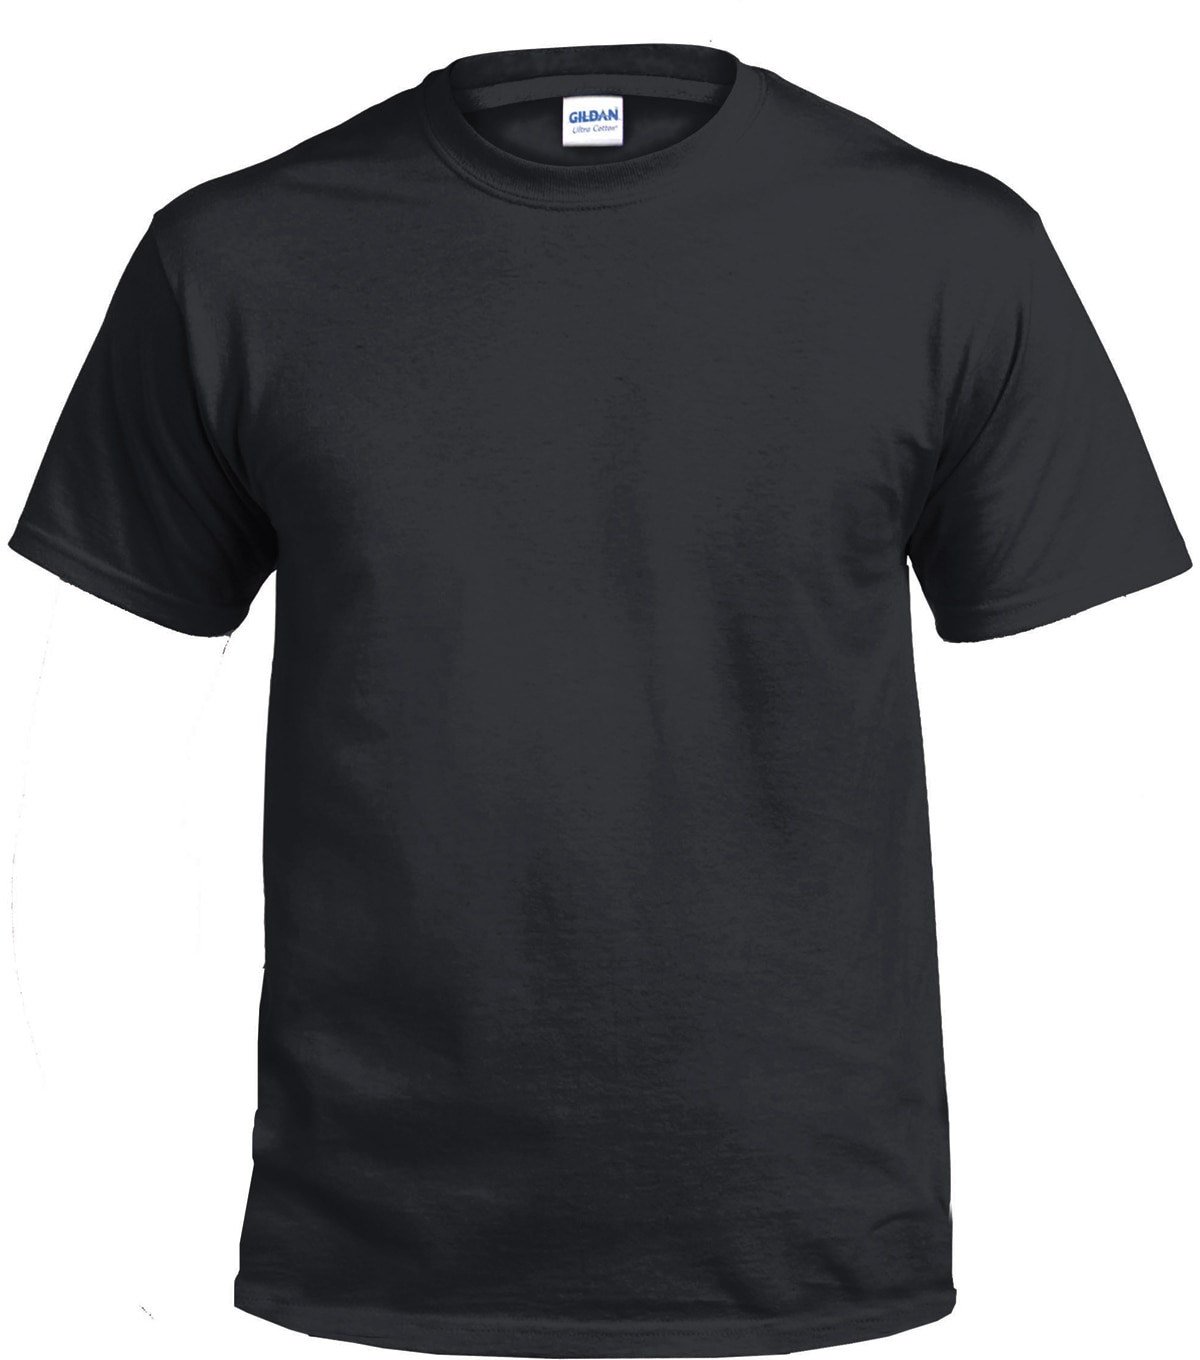 Gildan Adult T-shirt Medium | JOANN